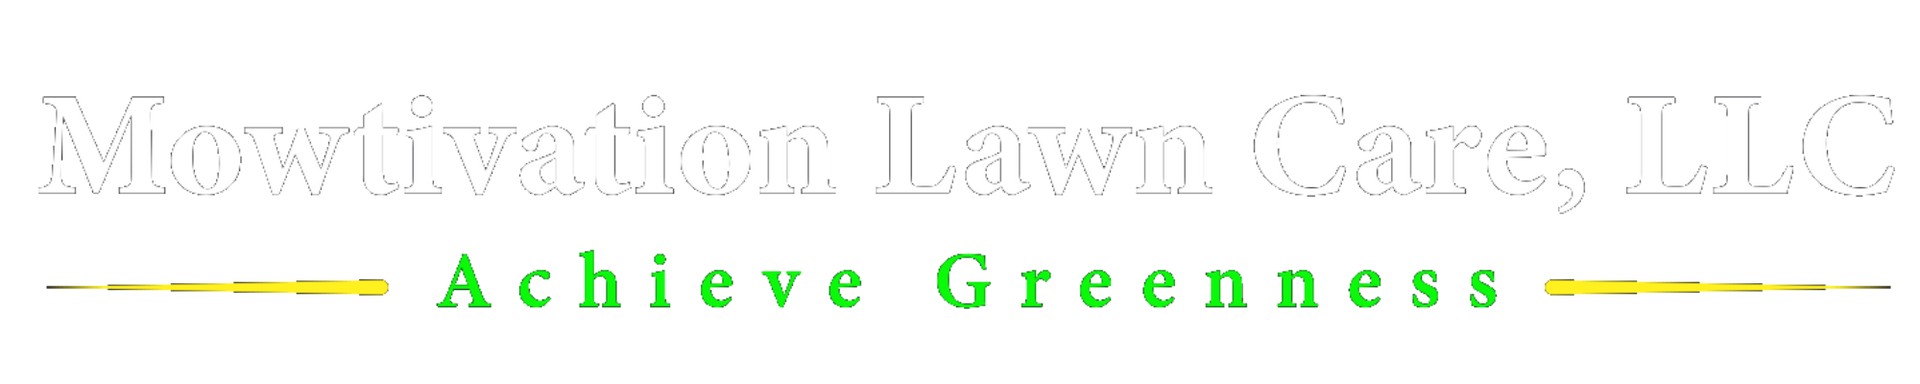 Mowtivation Lawn Care, LLC - Achieve Greeness